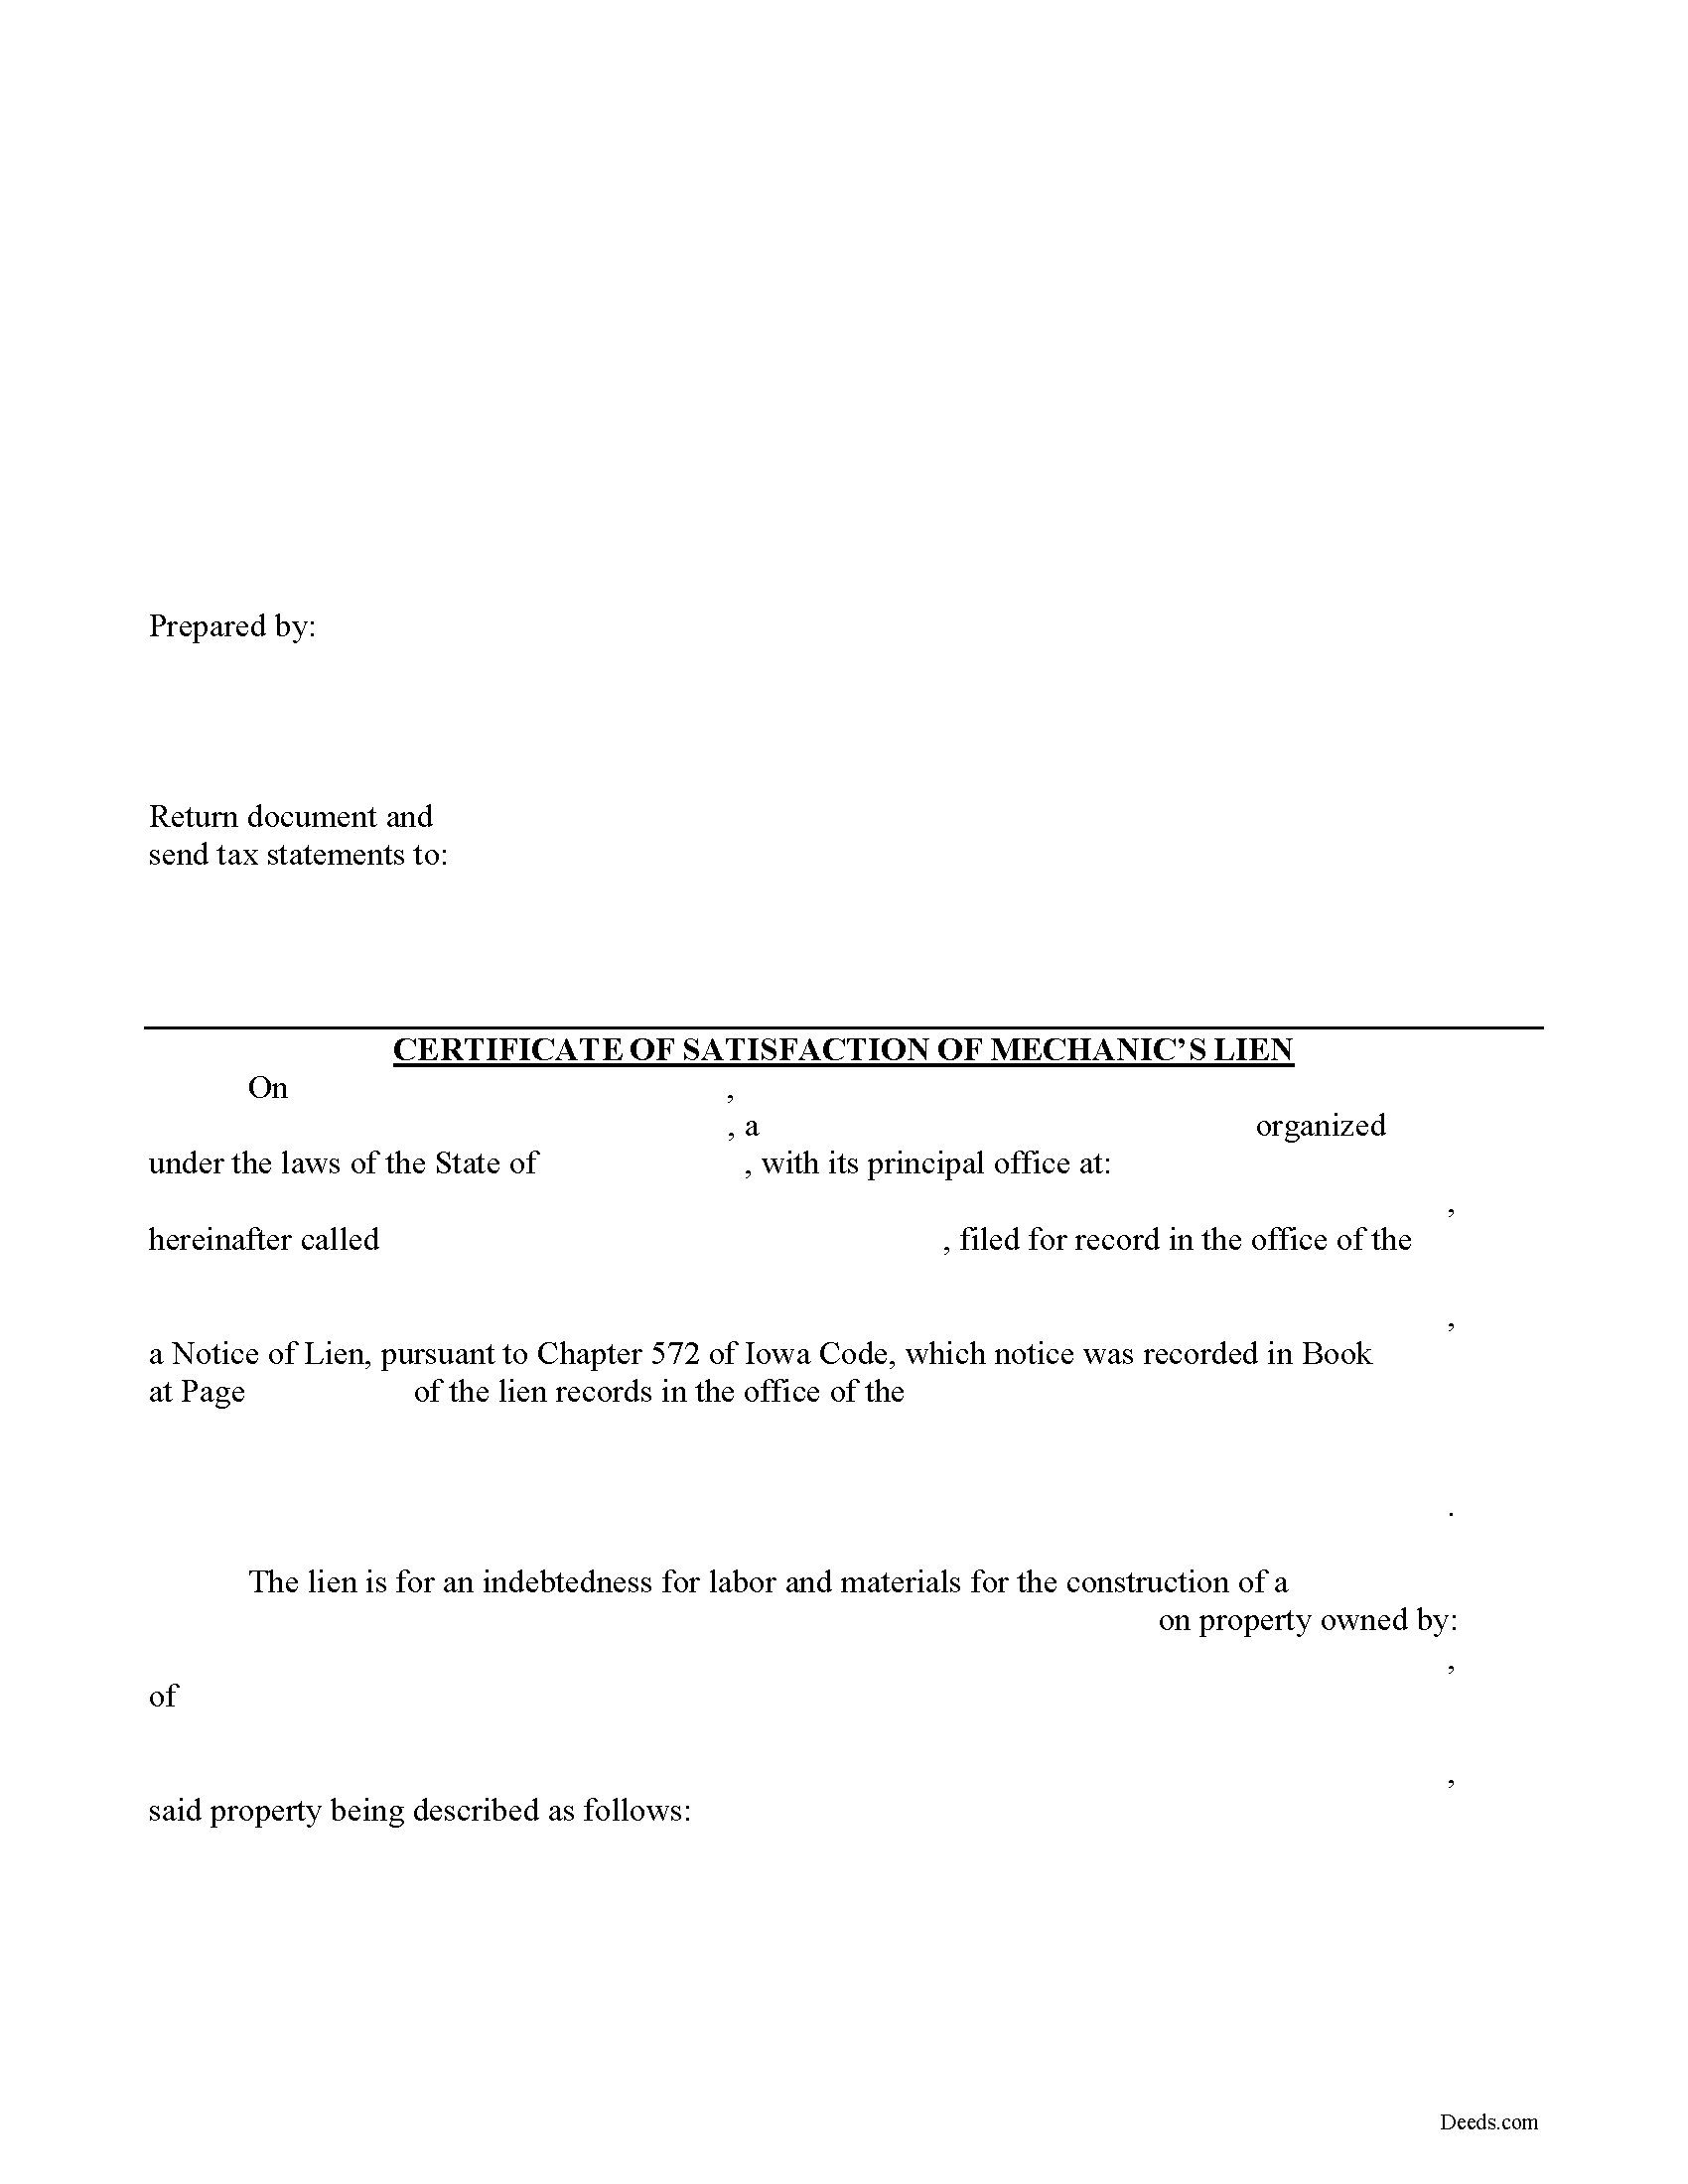 Certificate of Satisfaction Form